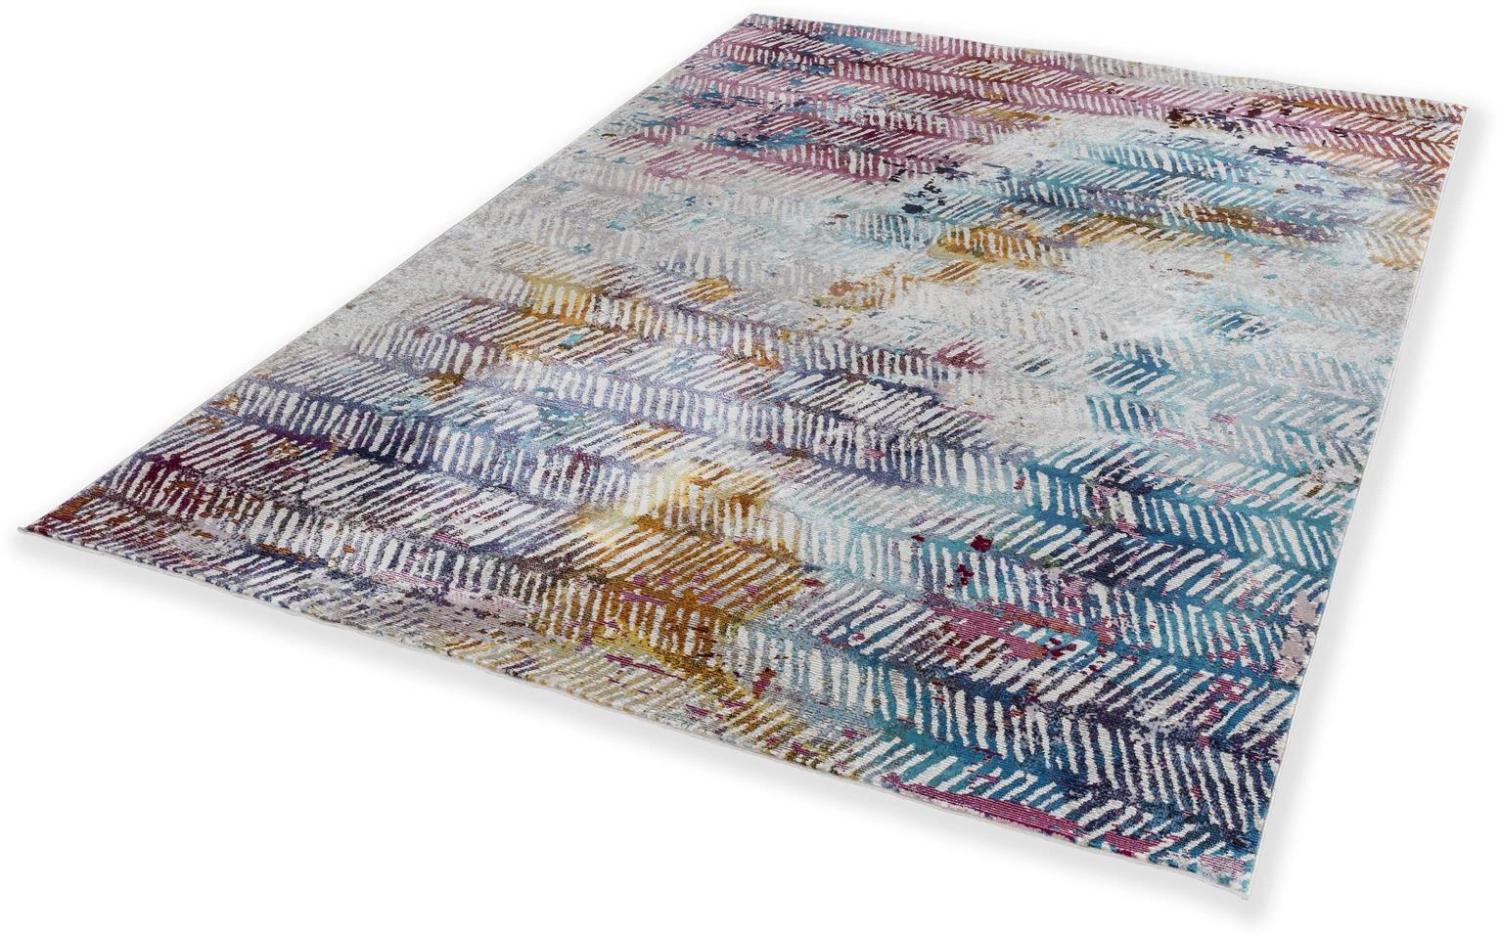 Teppich in Blau-Lila aus 100% Polypropylen - 235 cmx165 cmx0,6cm (LxBxH) Bild 1